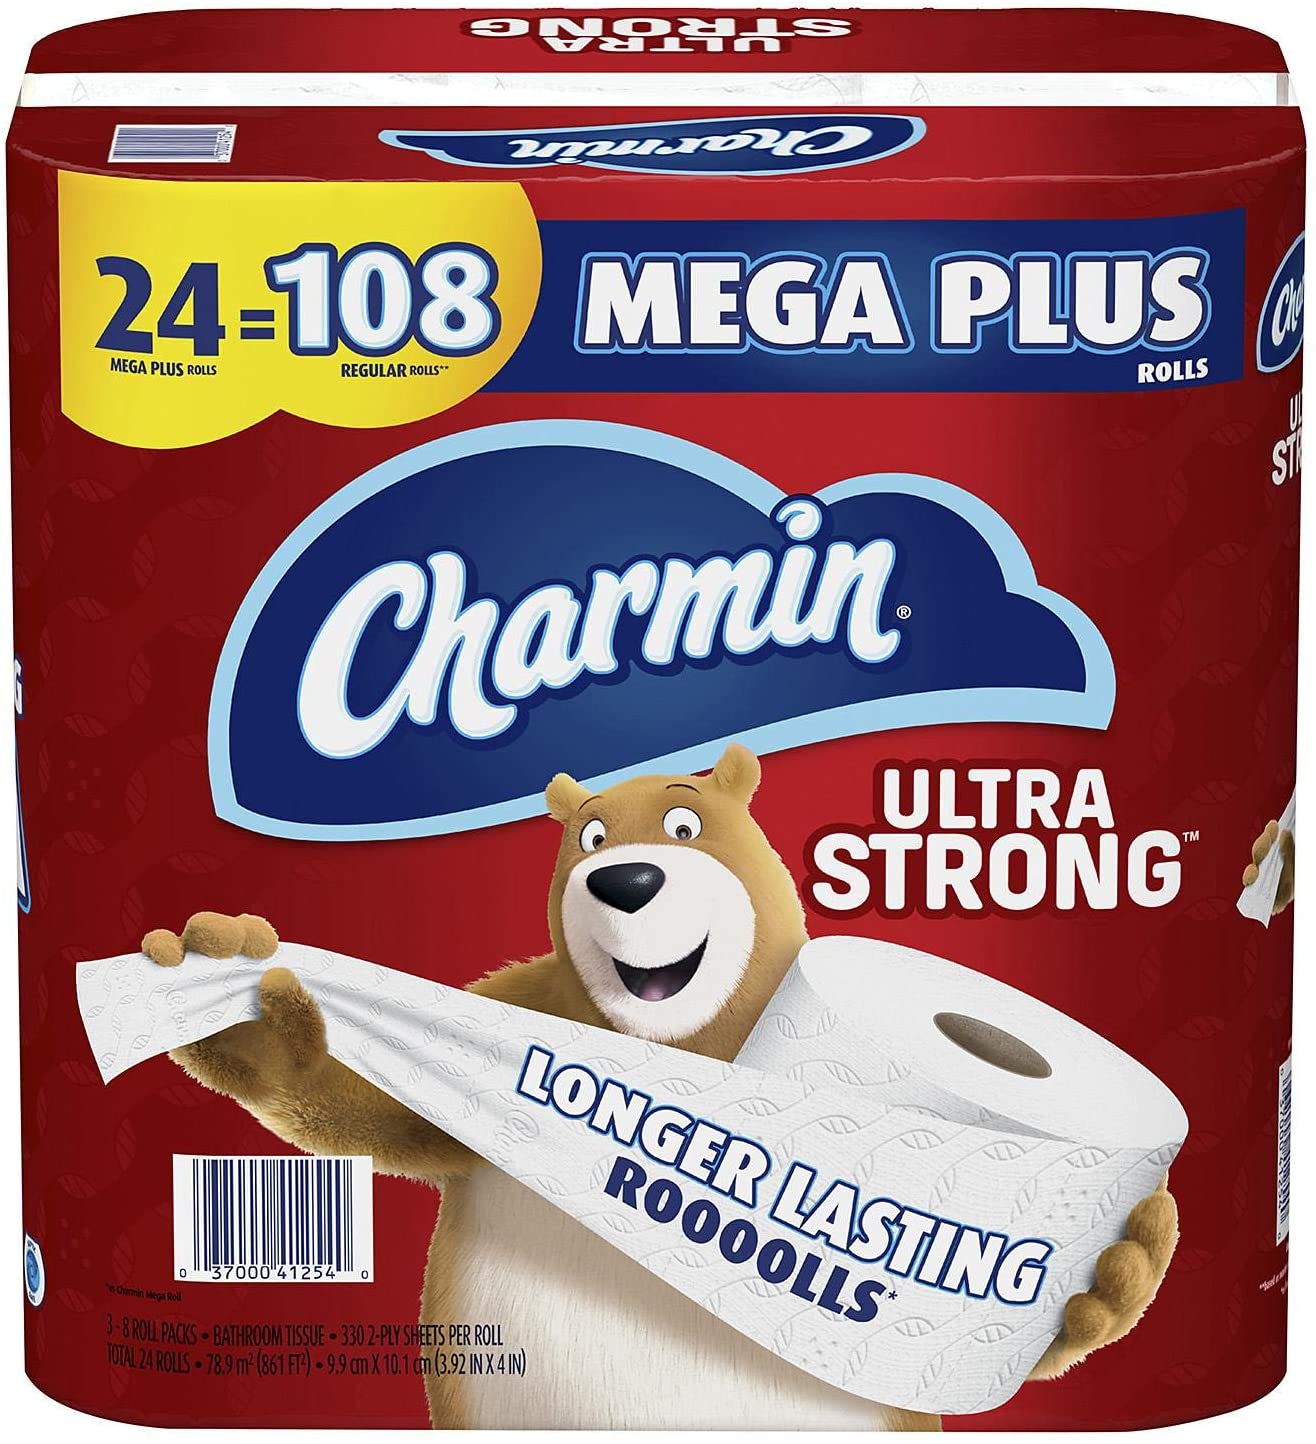 Charmin Ultra Strong Toilet Paper 24 Mega Rolls = 108 Regular Rolls